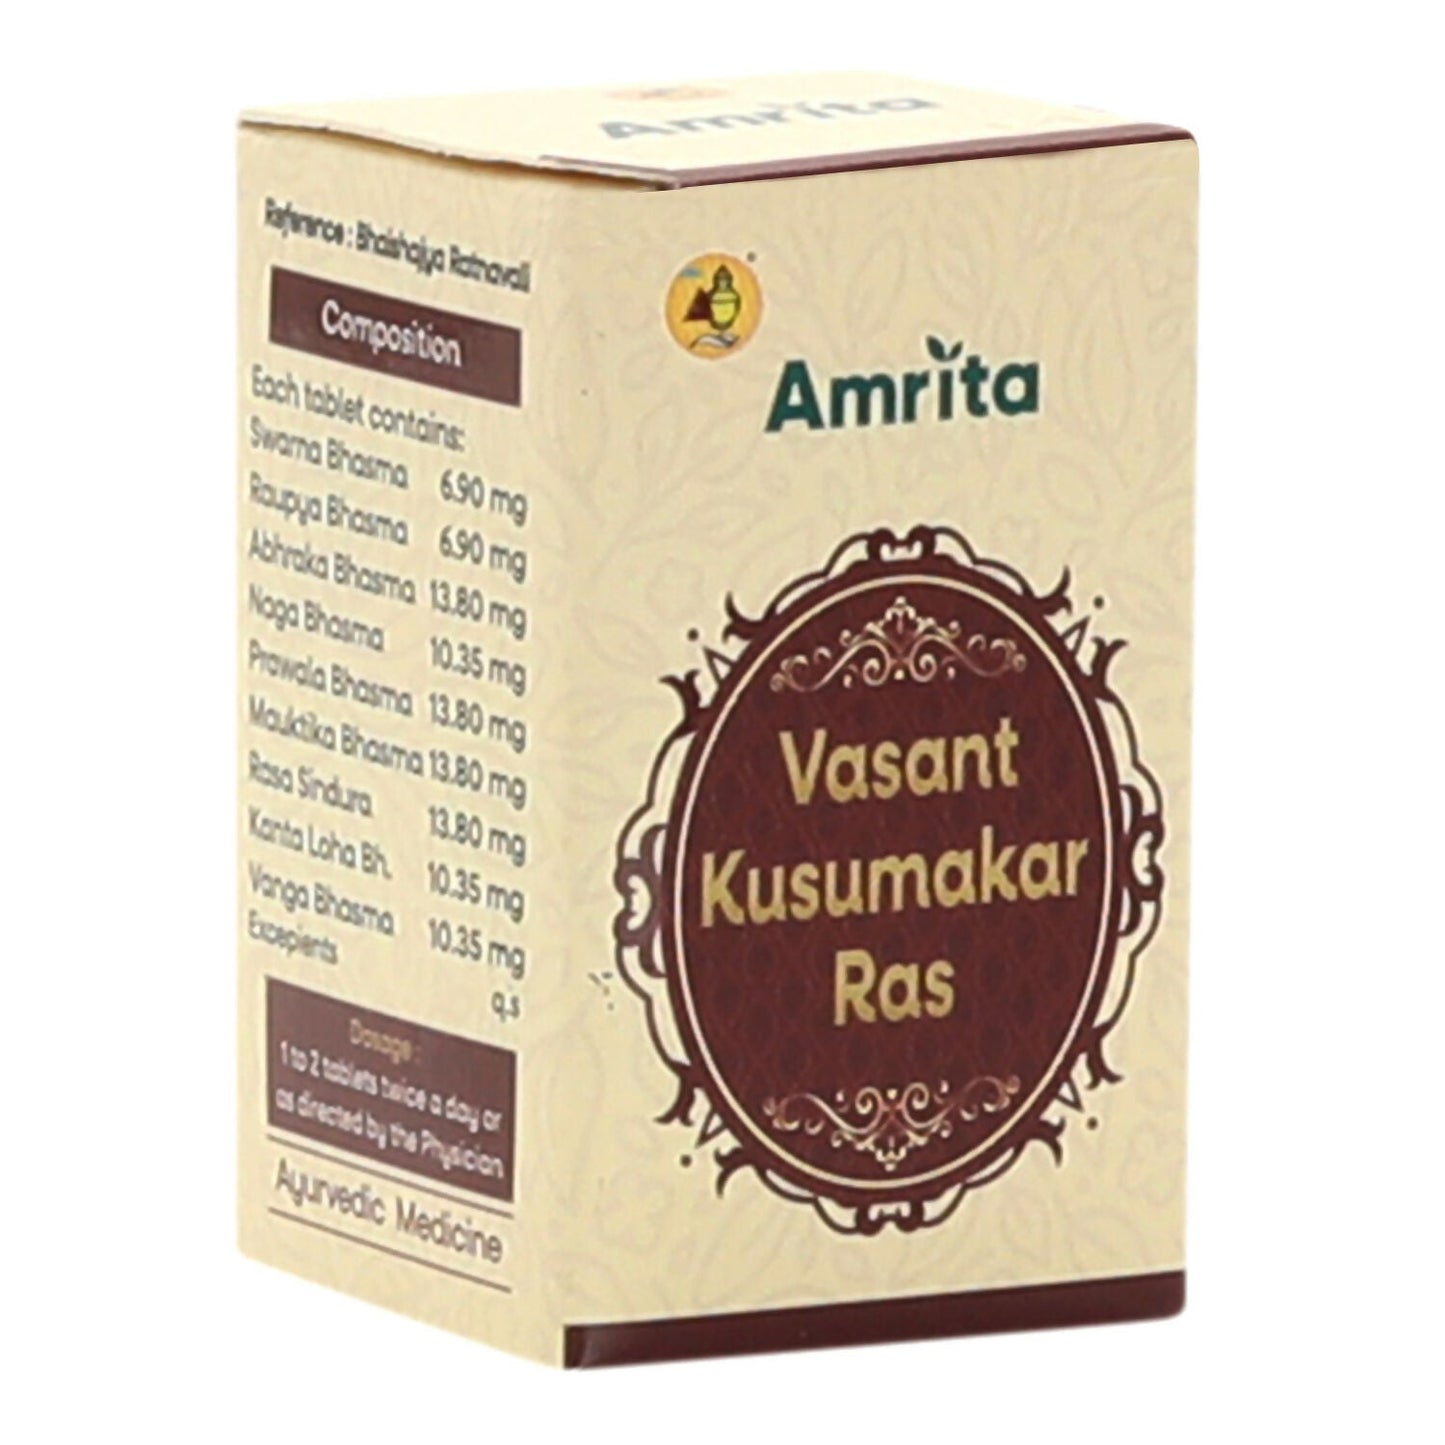 Amrita Vasant Kusumakar Ras Gold Tablets